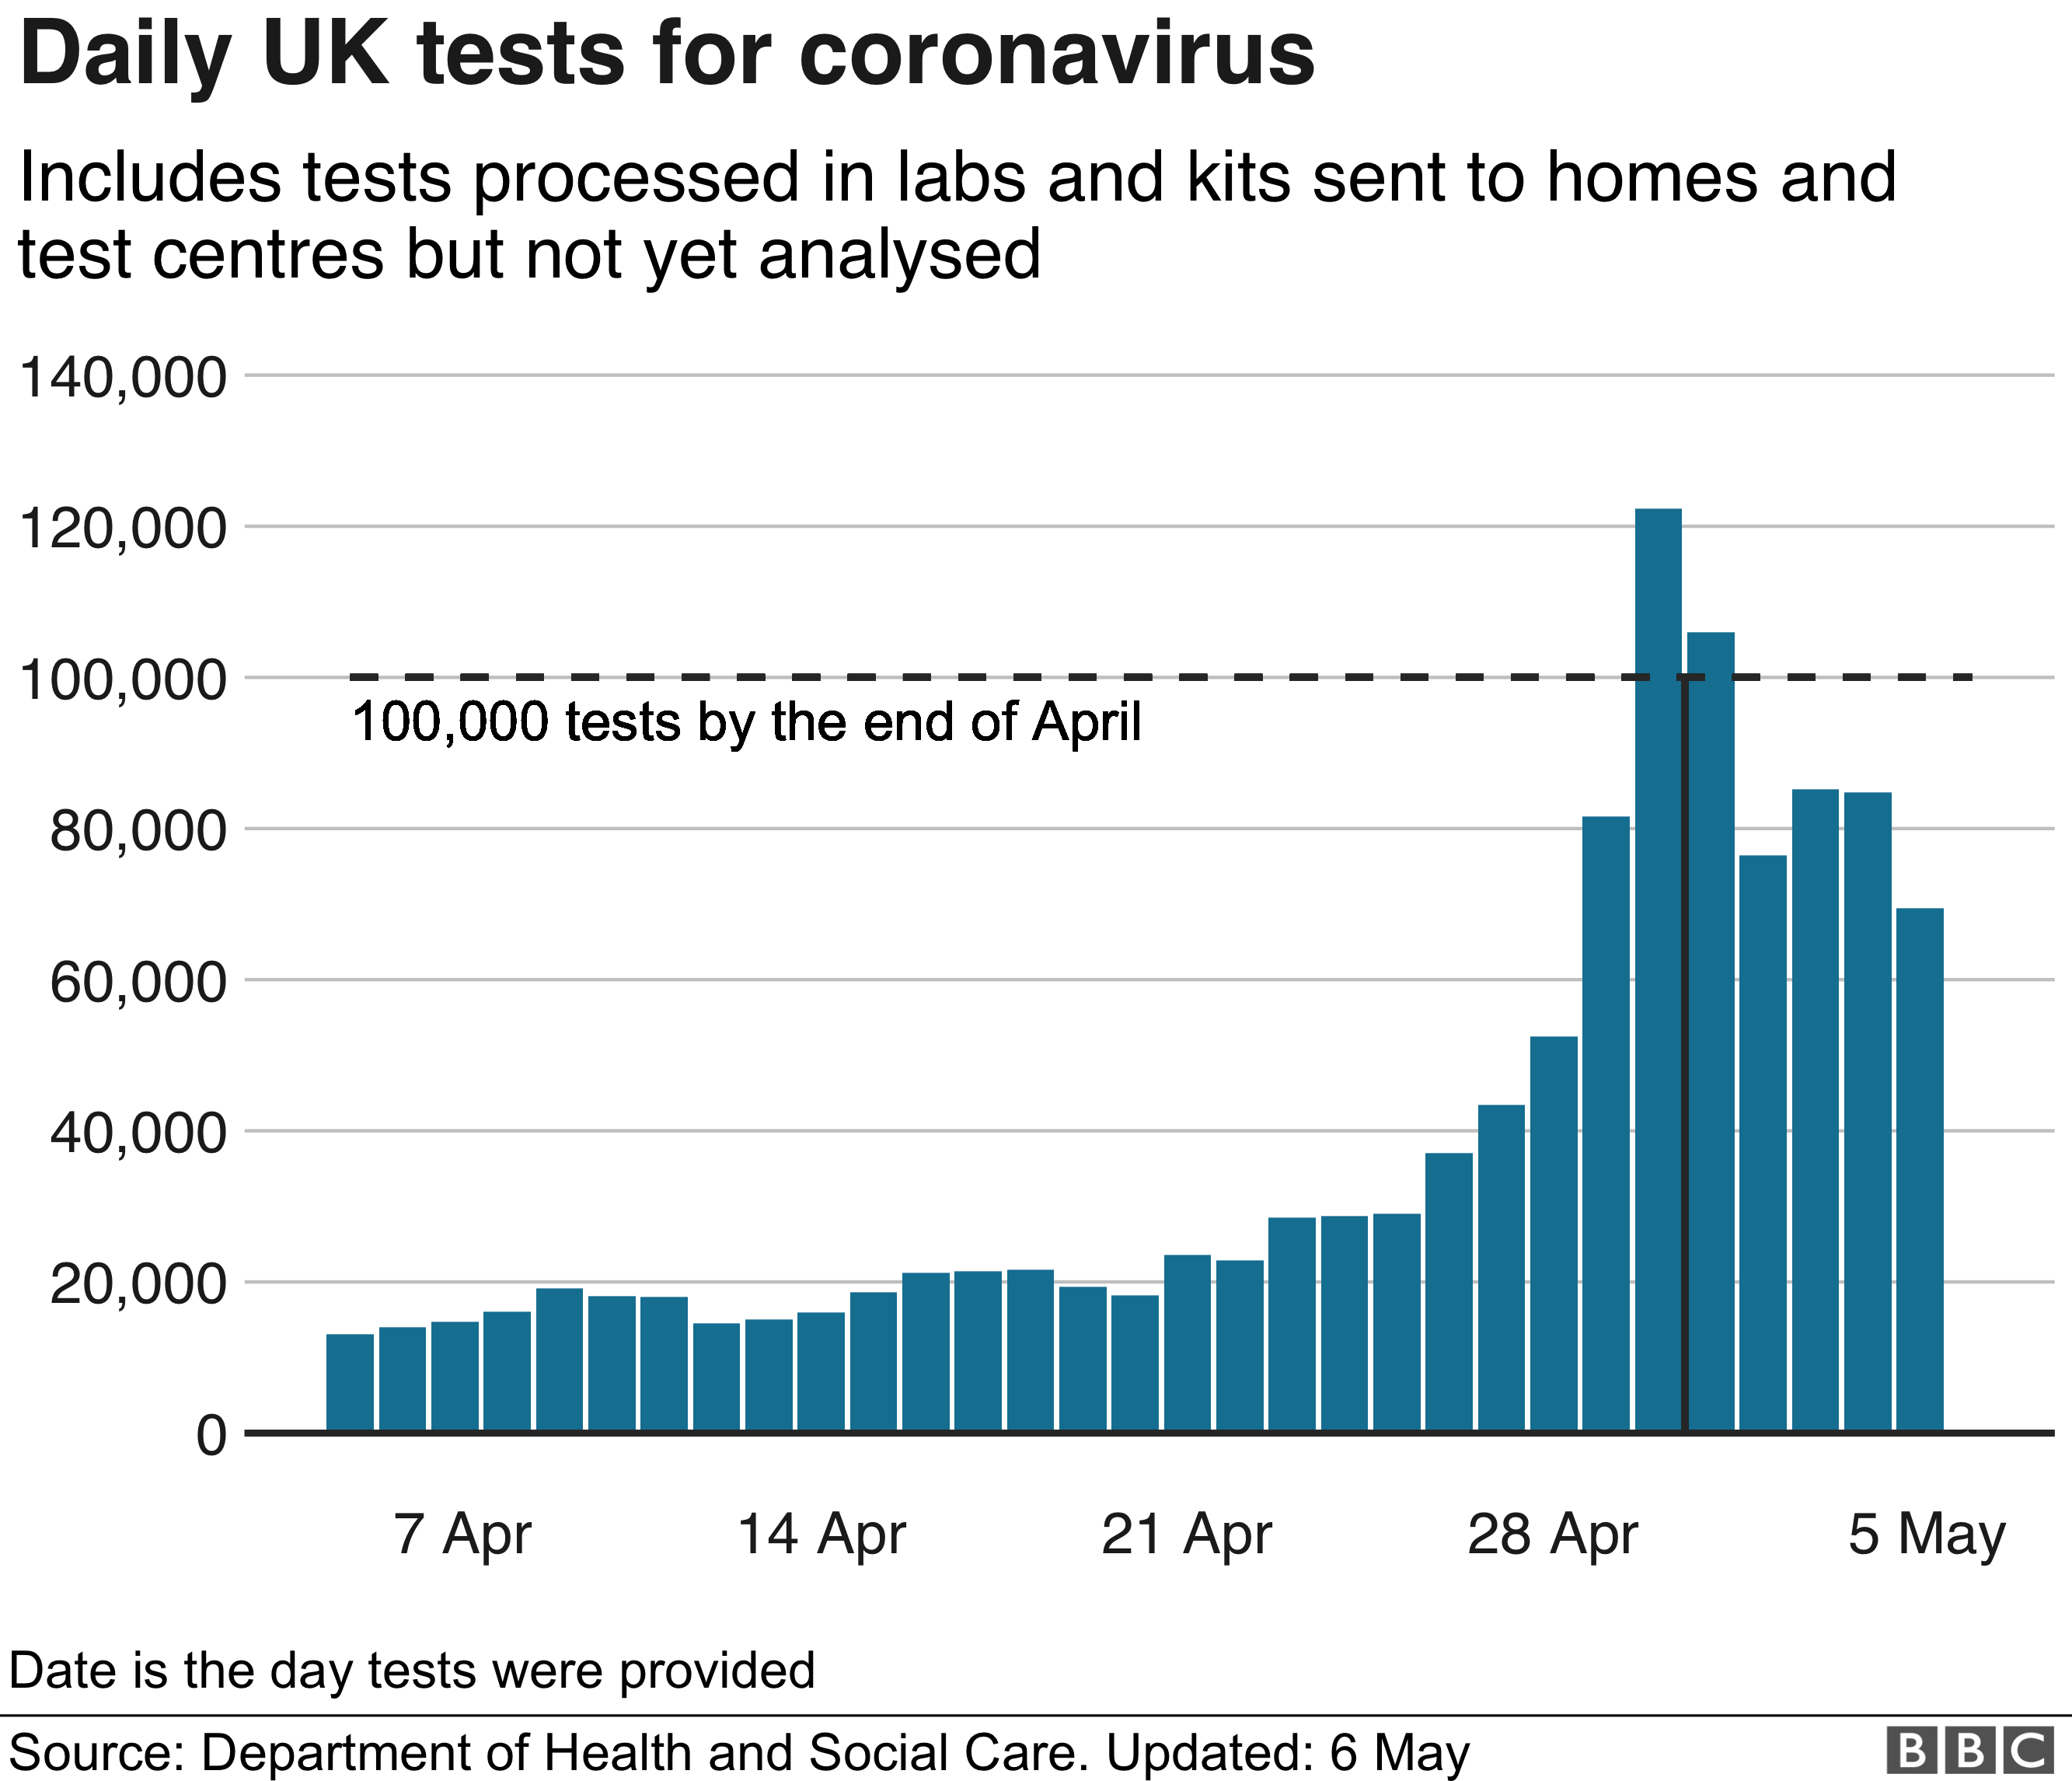 Graph showing daily UK tests for coronavirus